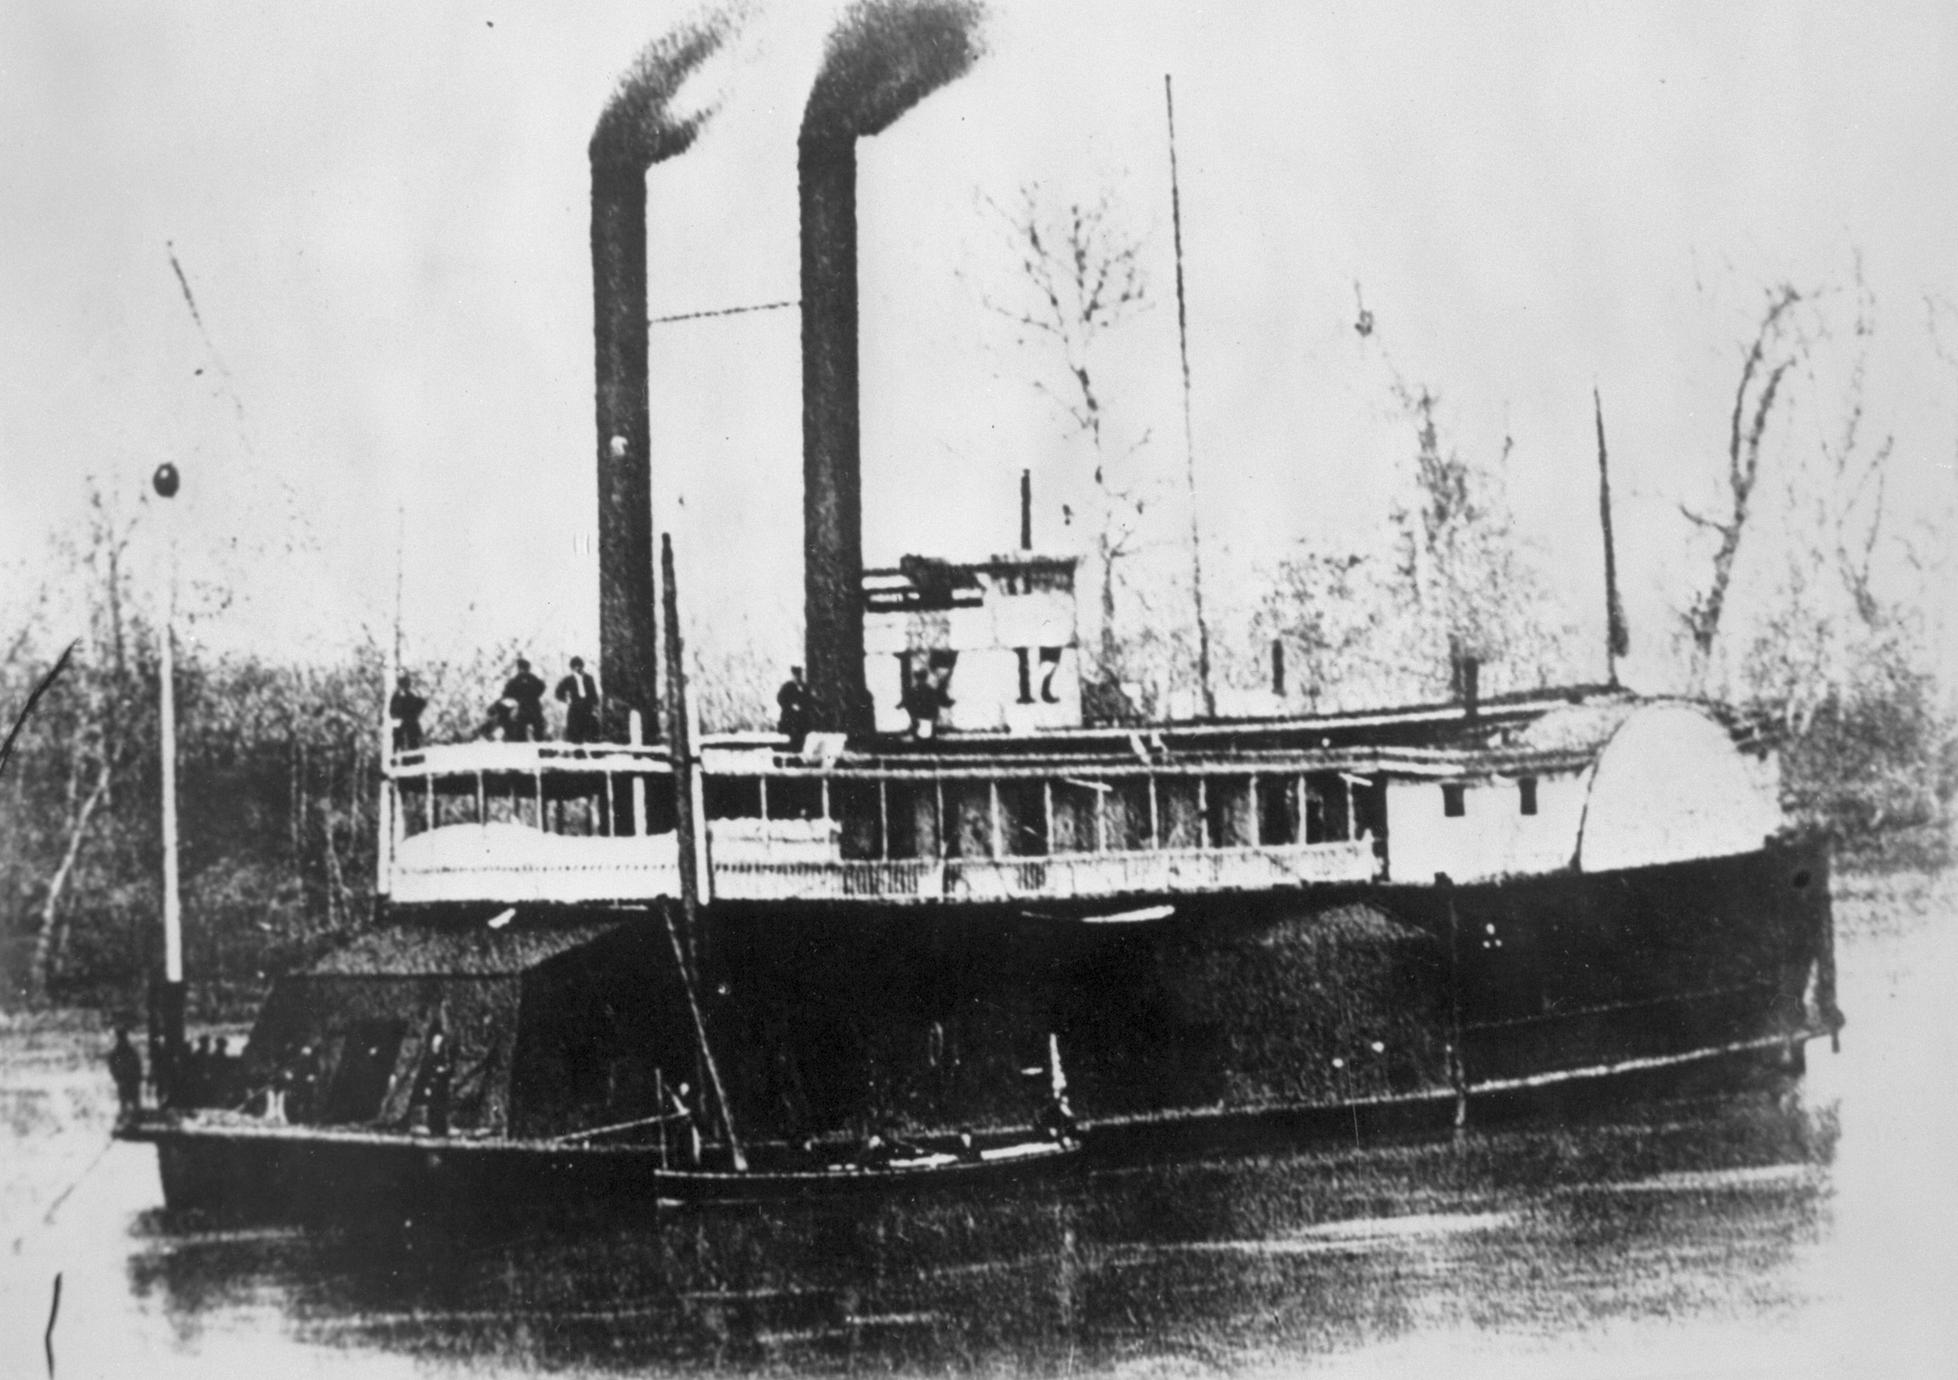 Fairplay (Packet/Gunboat, 1859-1865)